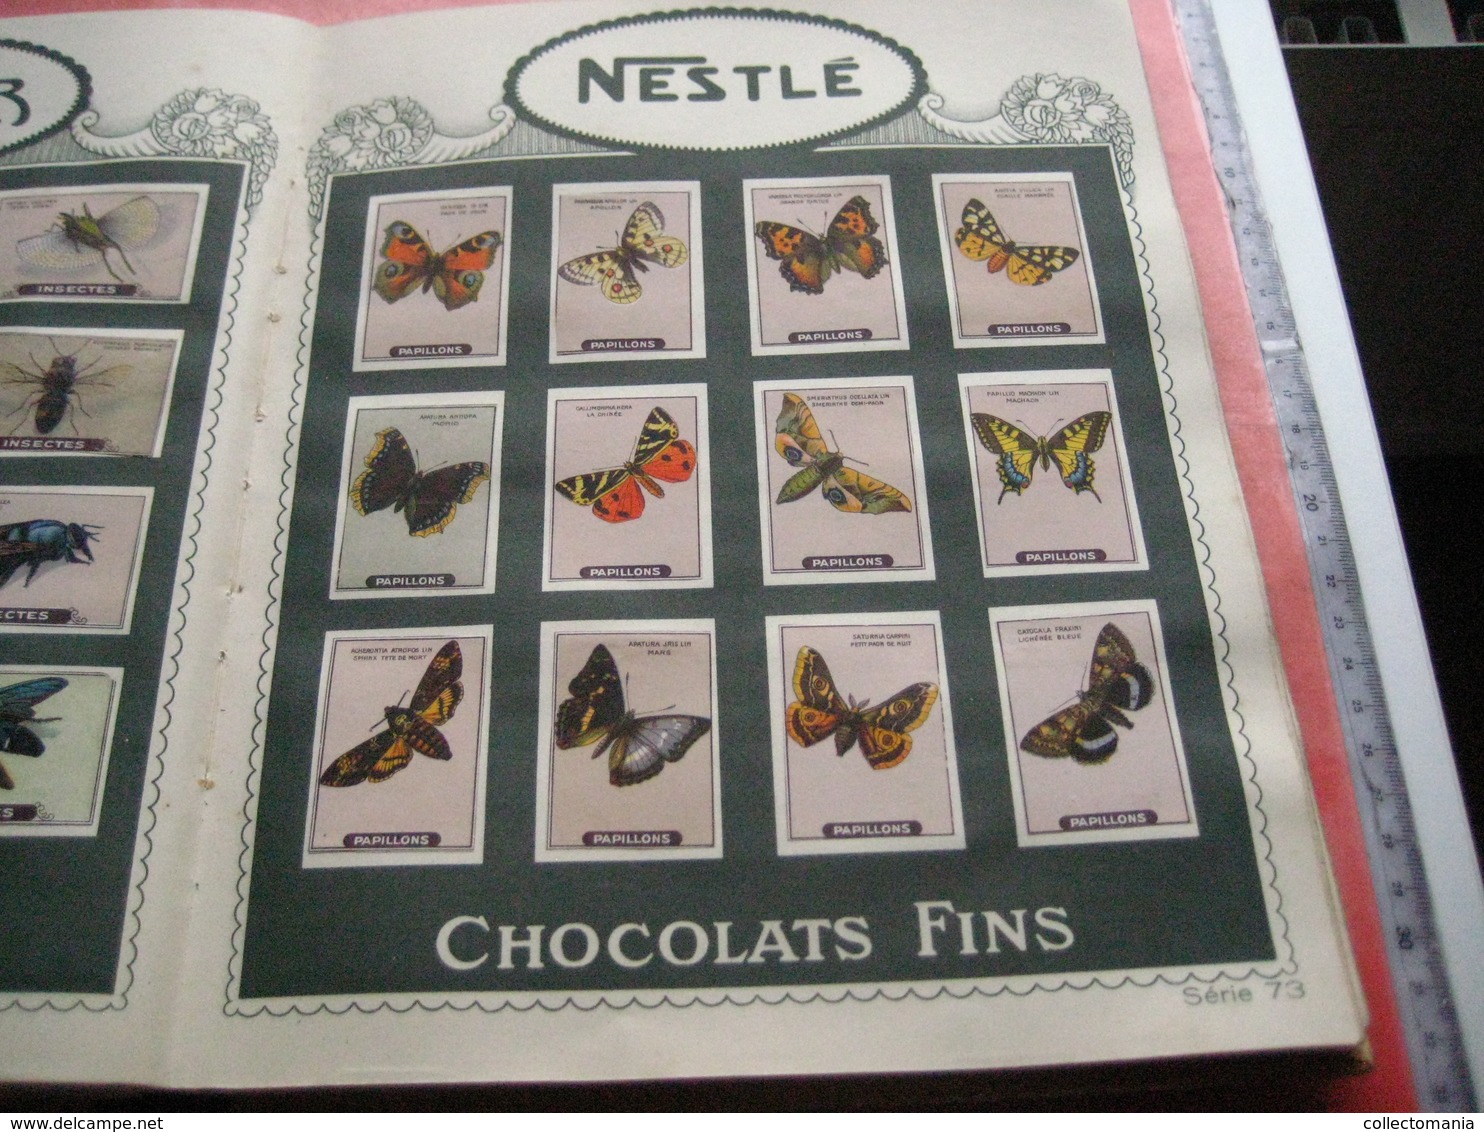 full set 1440 cards, complete sets of 12 excellent chromos, original album - NESTLE butterflies, dogs, horses VG c1926